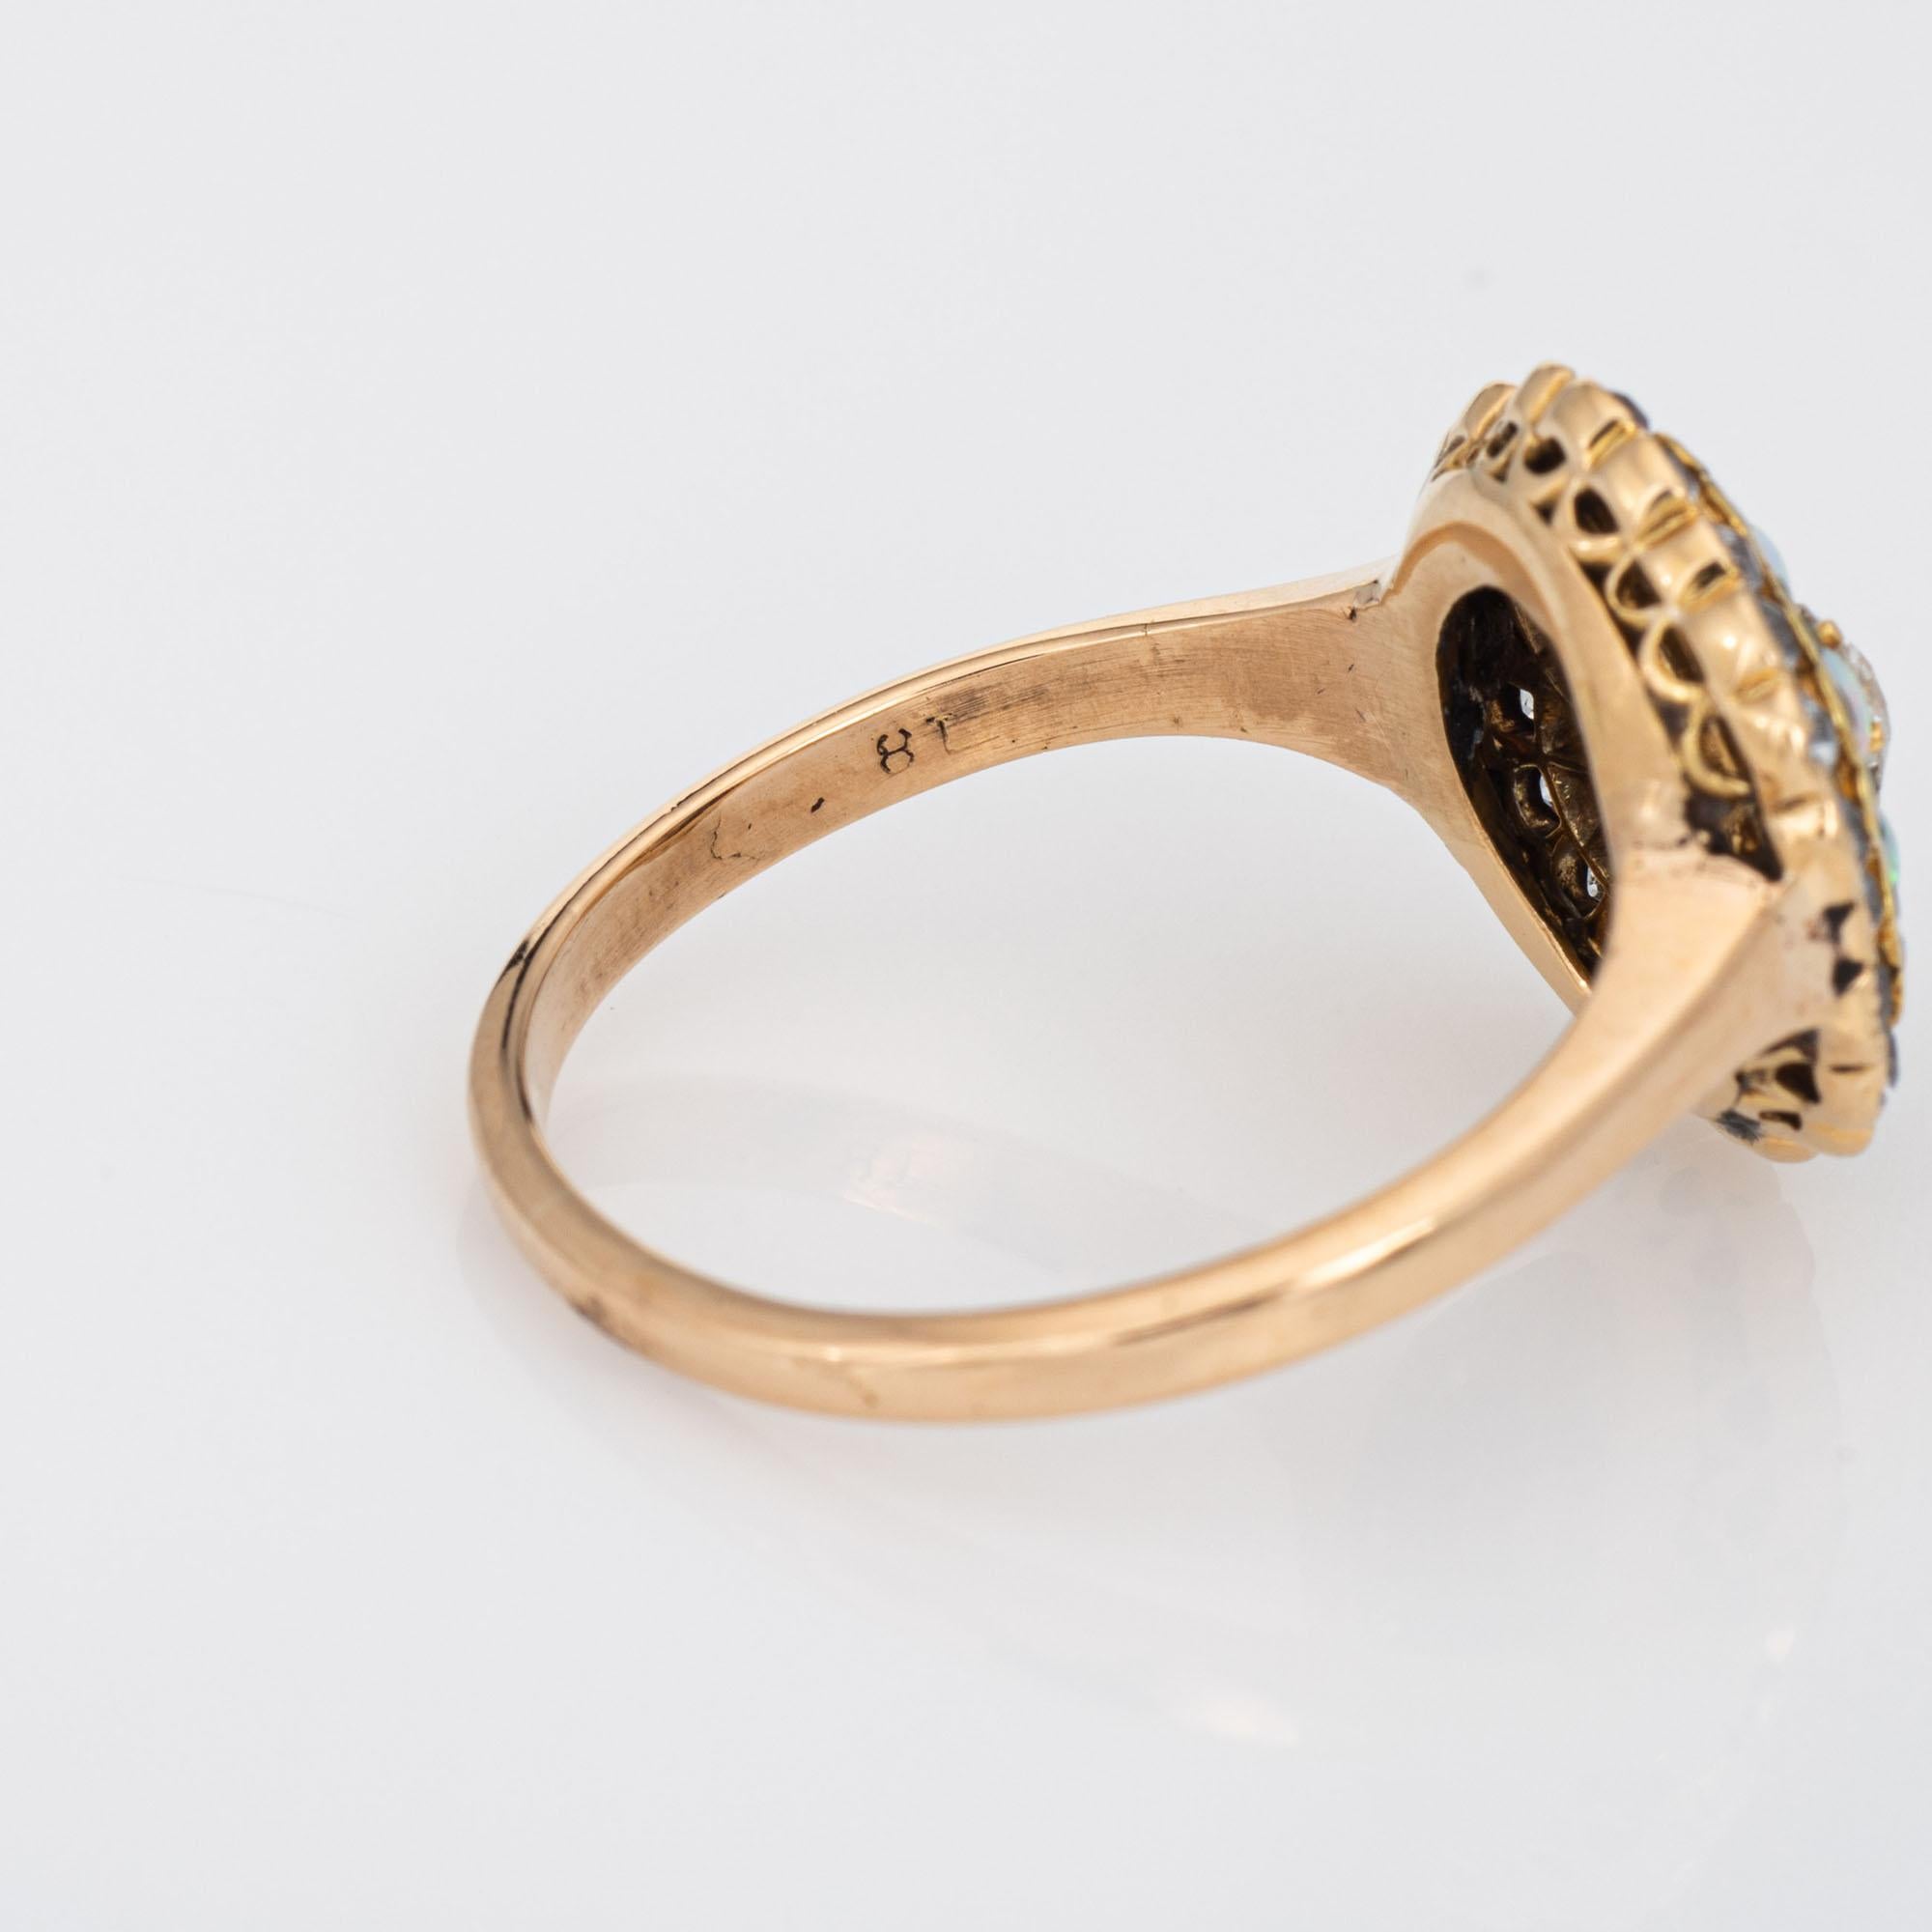 Antique Edwardian Opal Diamond Ring Demantoid Garnet 18k Yellow Gold Jewelry 2